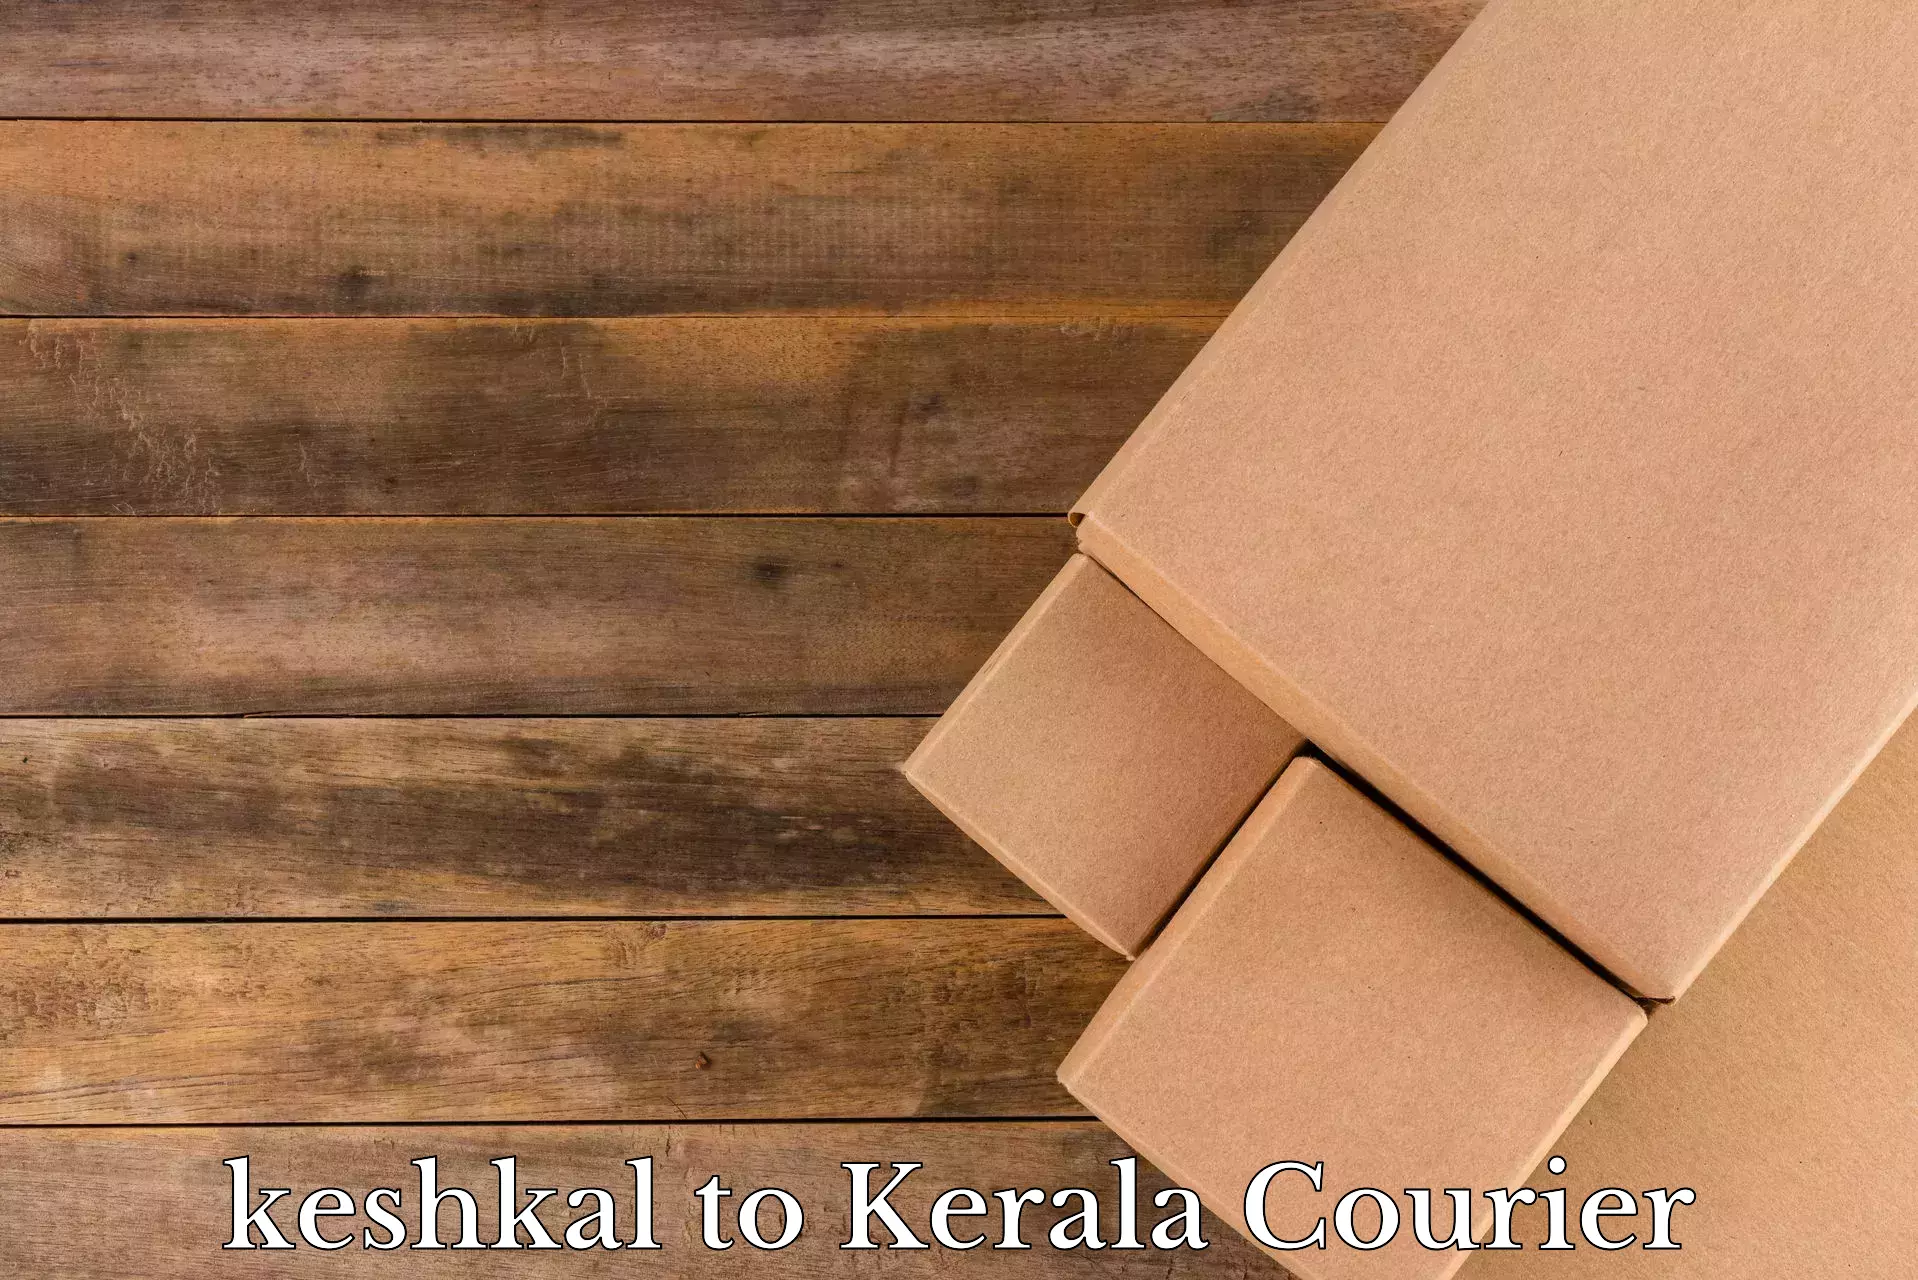 Hassle-free relocation keshkal to Manthuka